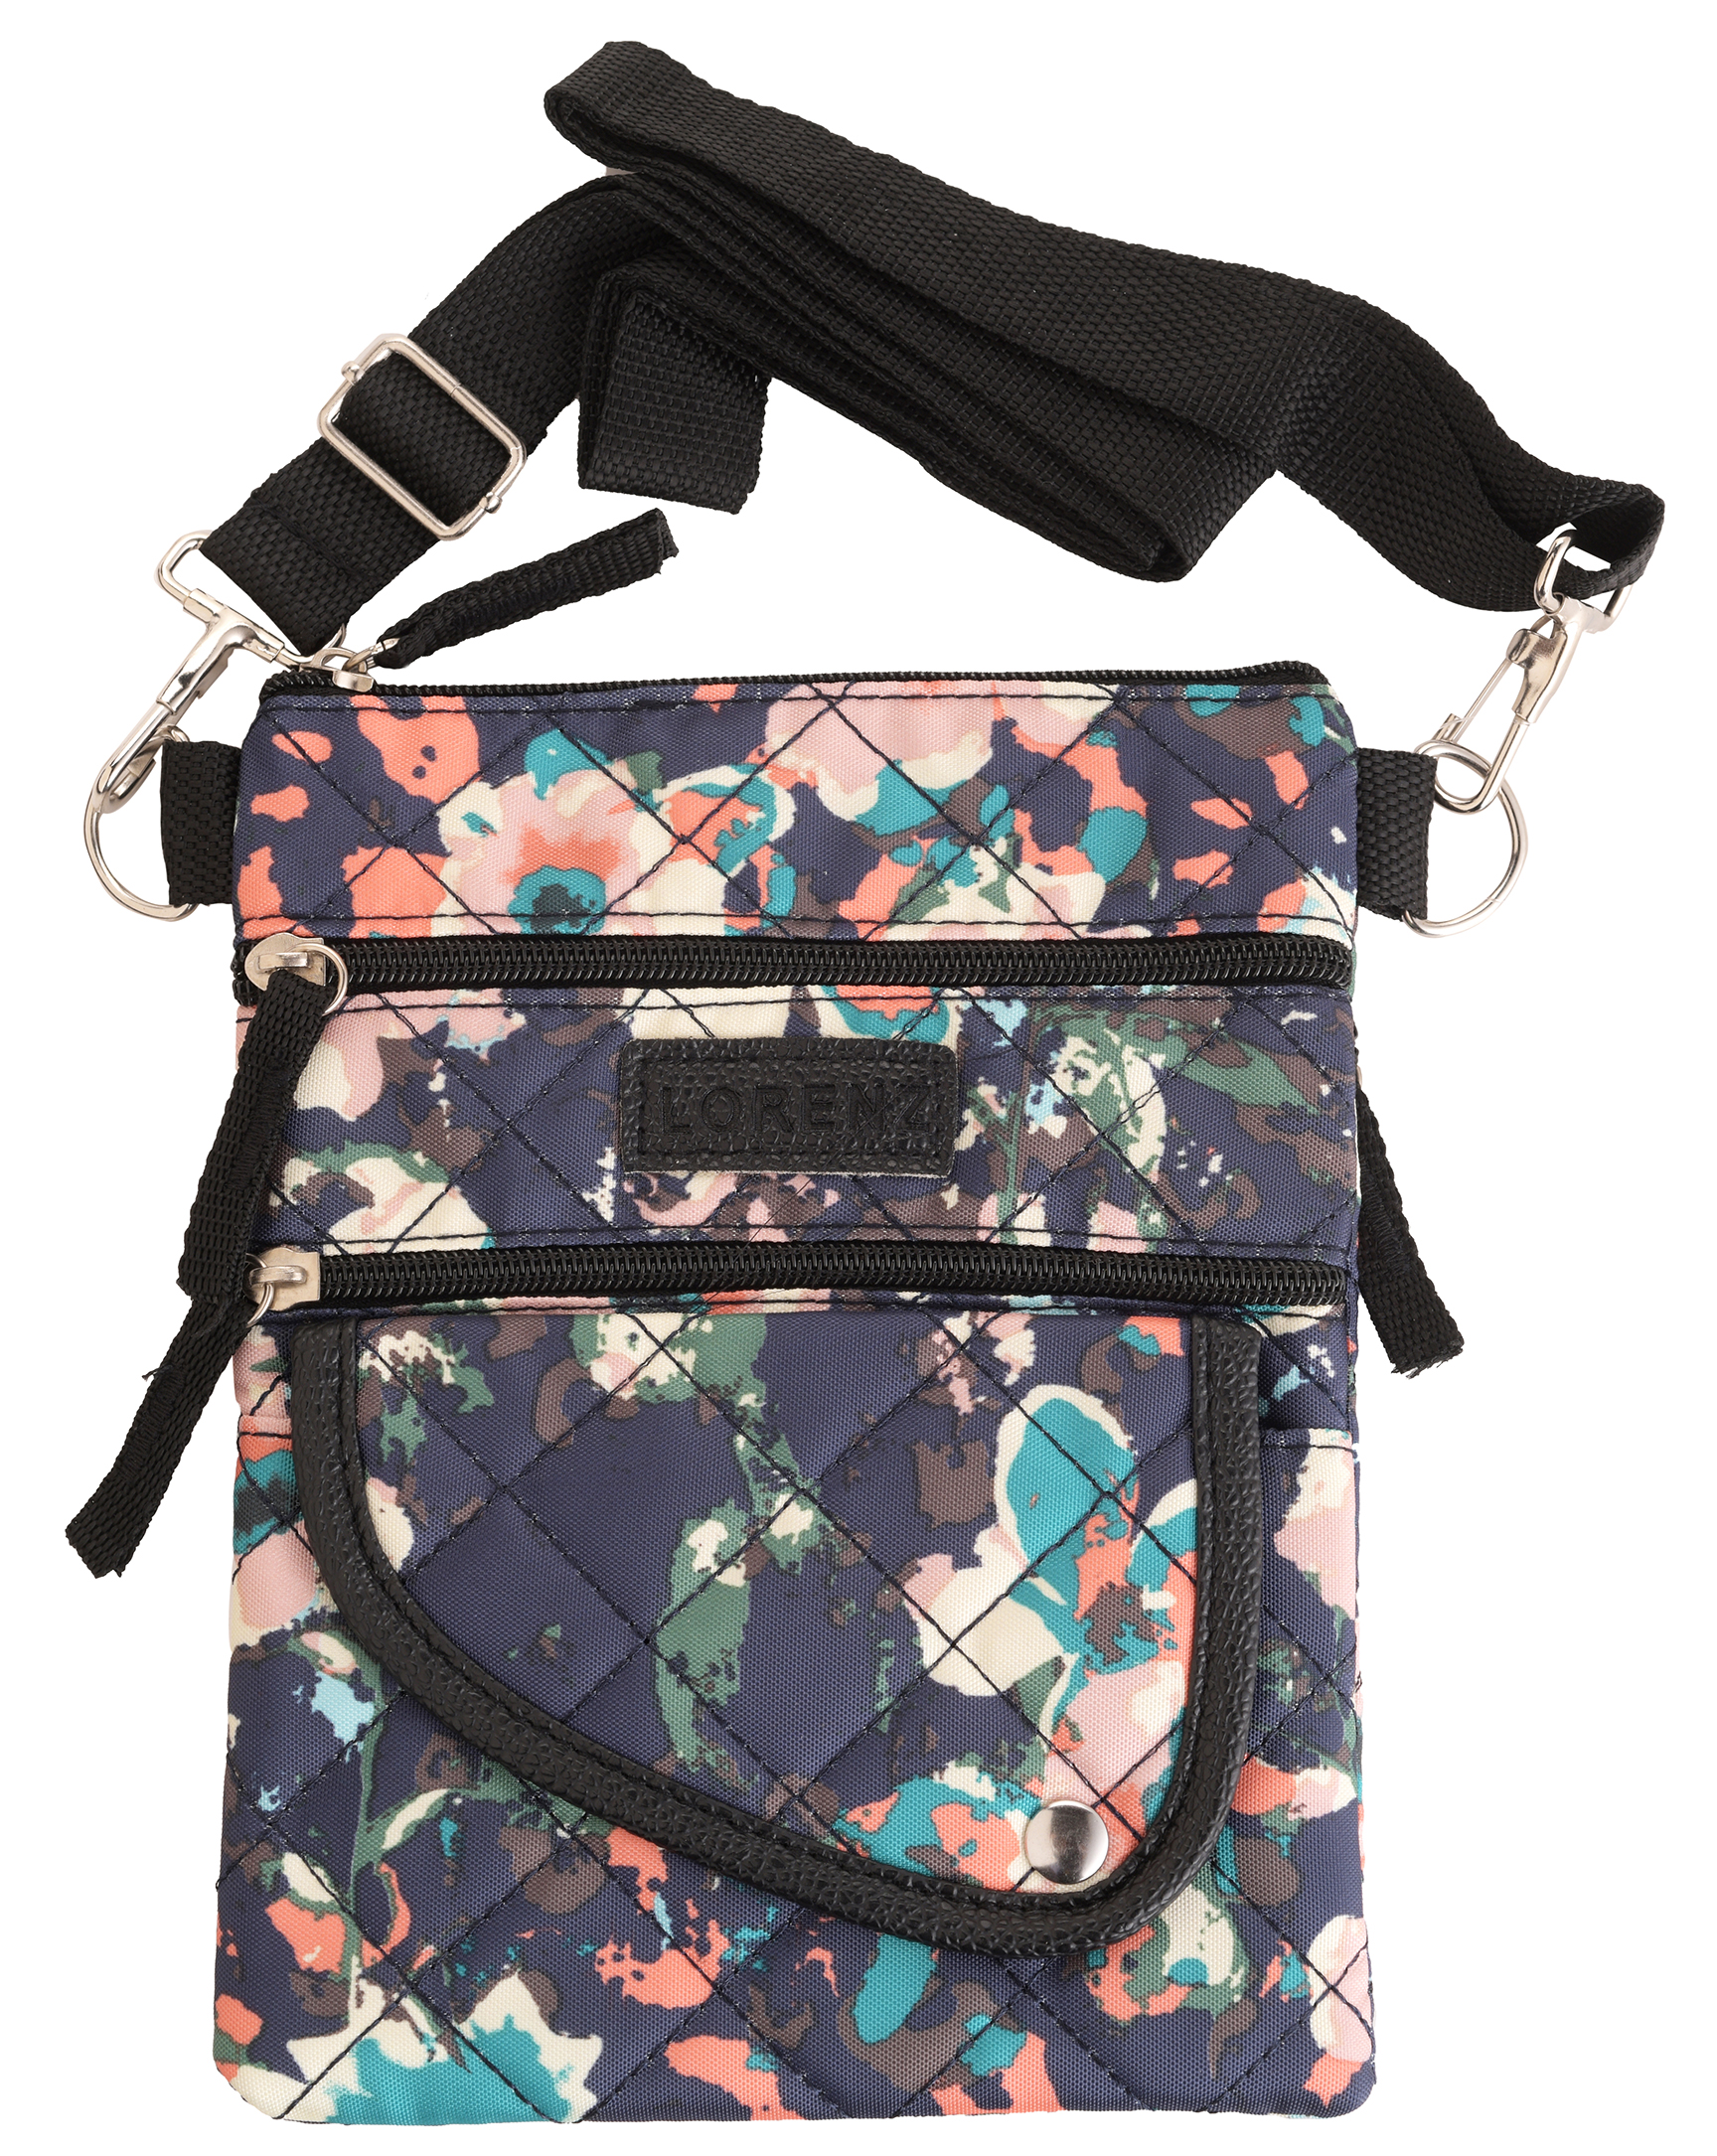 Ladies Girls Lightweight Bright Colour Multi Zip Cross Body Shoulder Bag Handbag | eBay